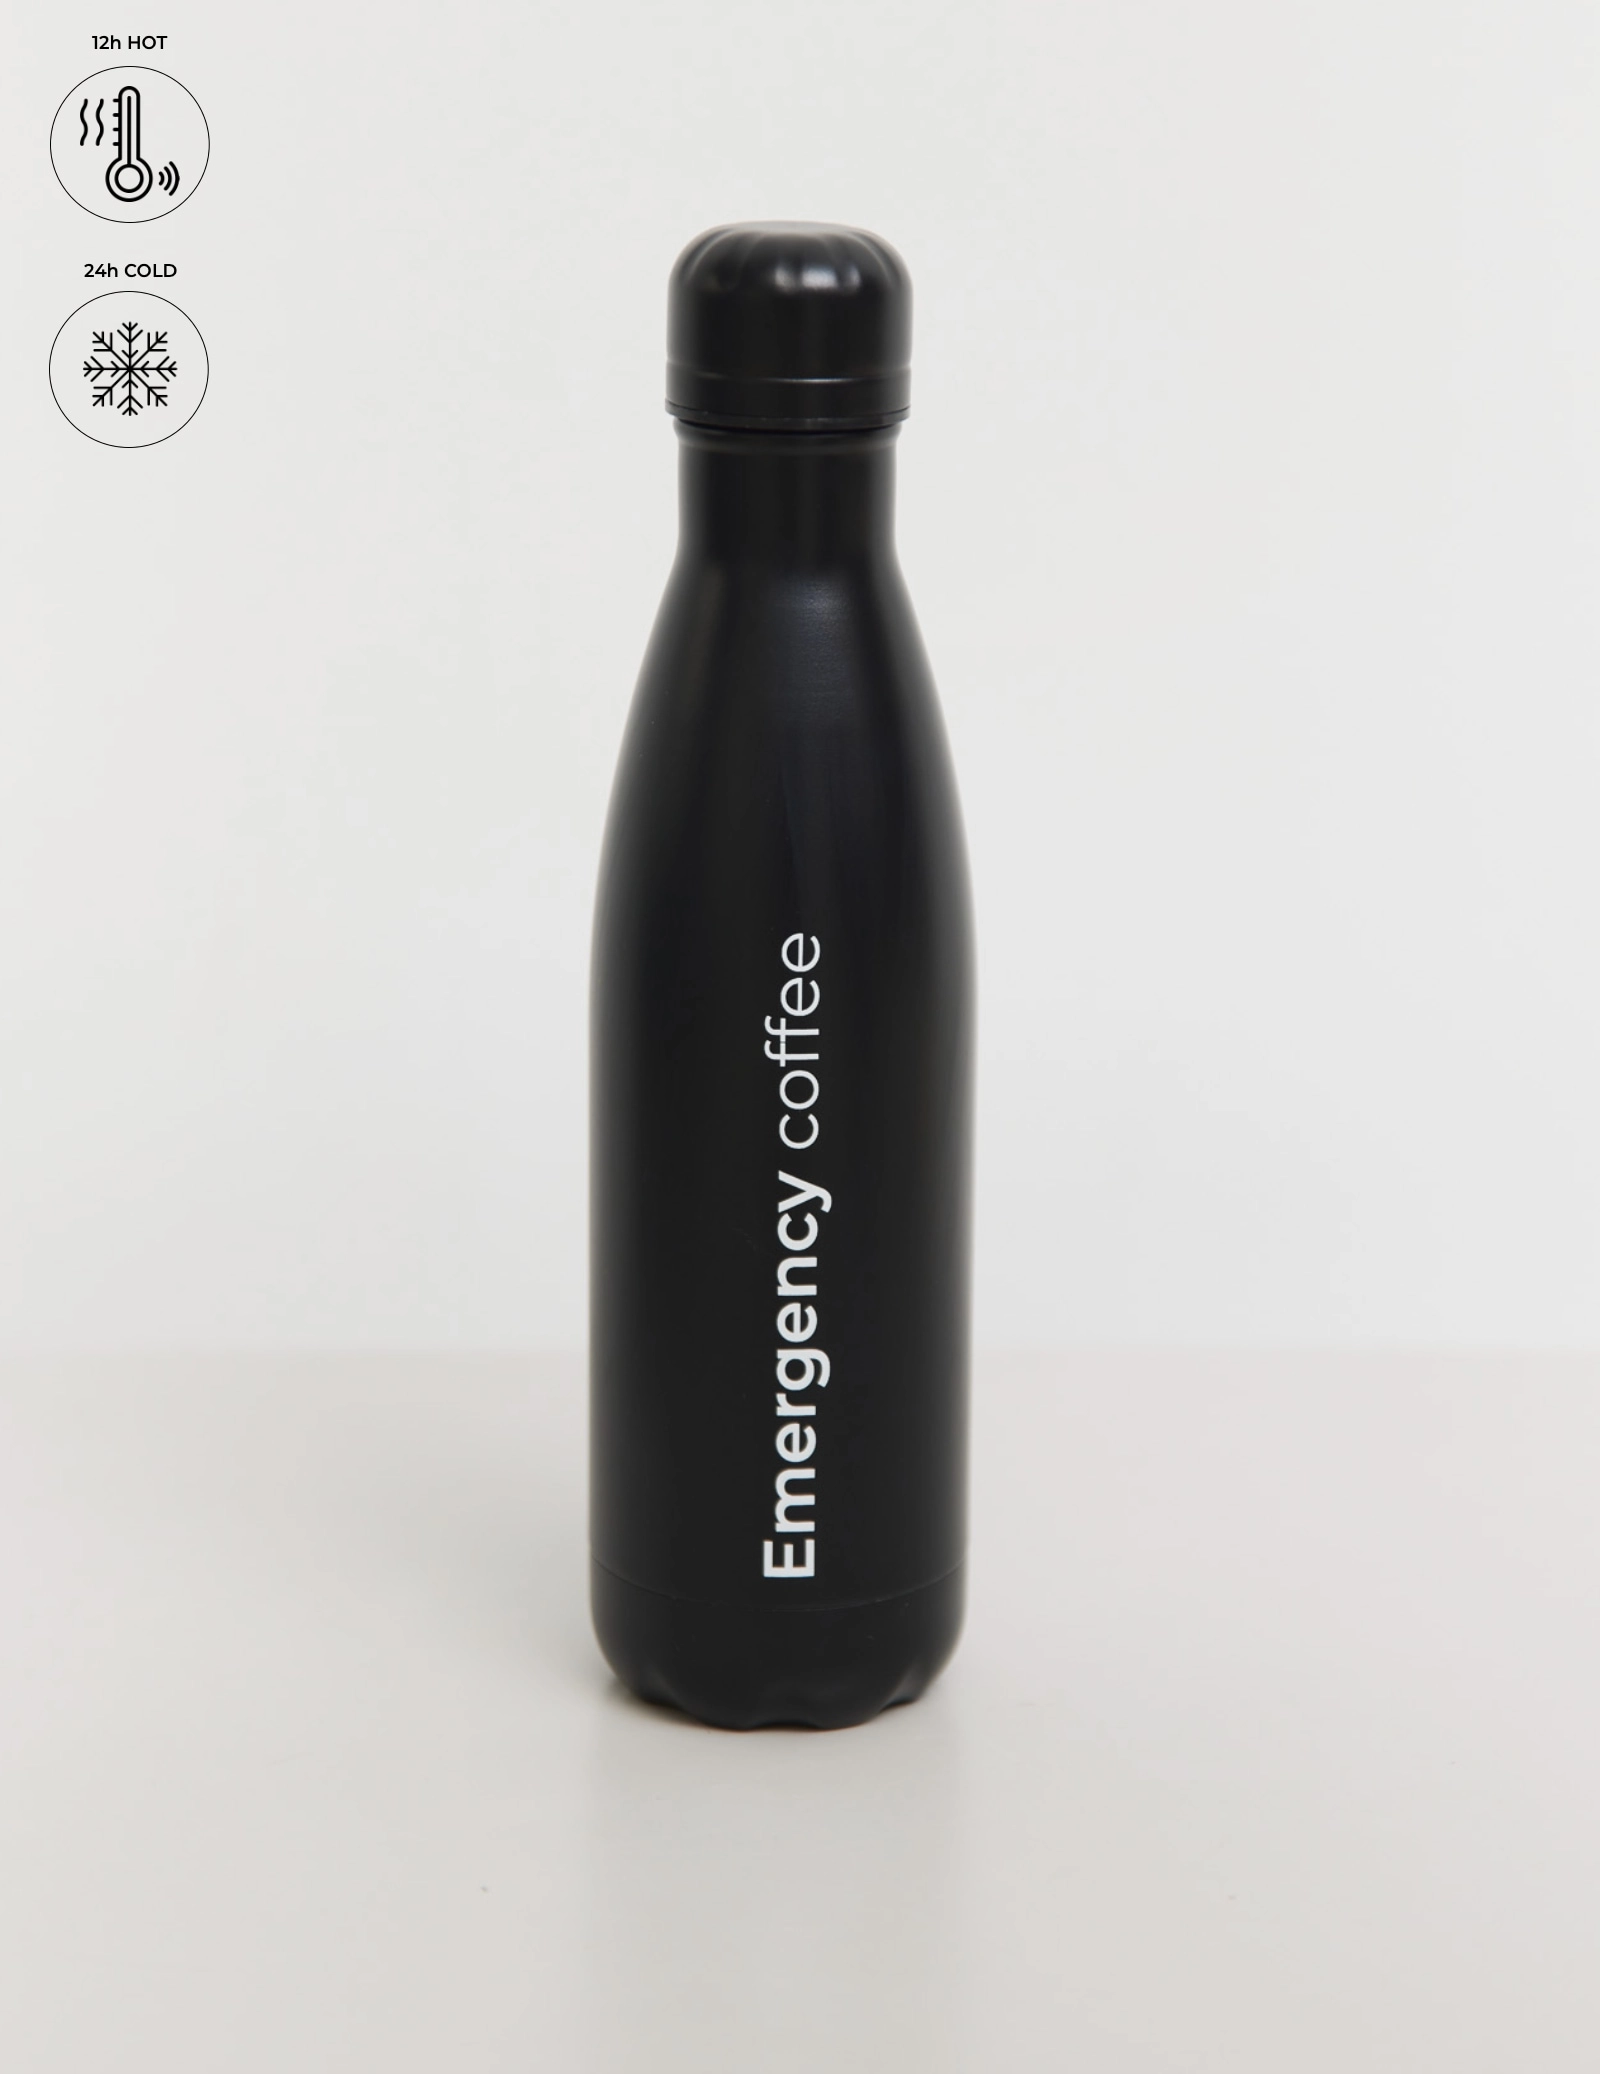 Classic "Emergency Coffee" thermal bottle - Black